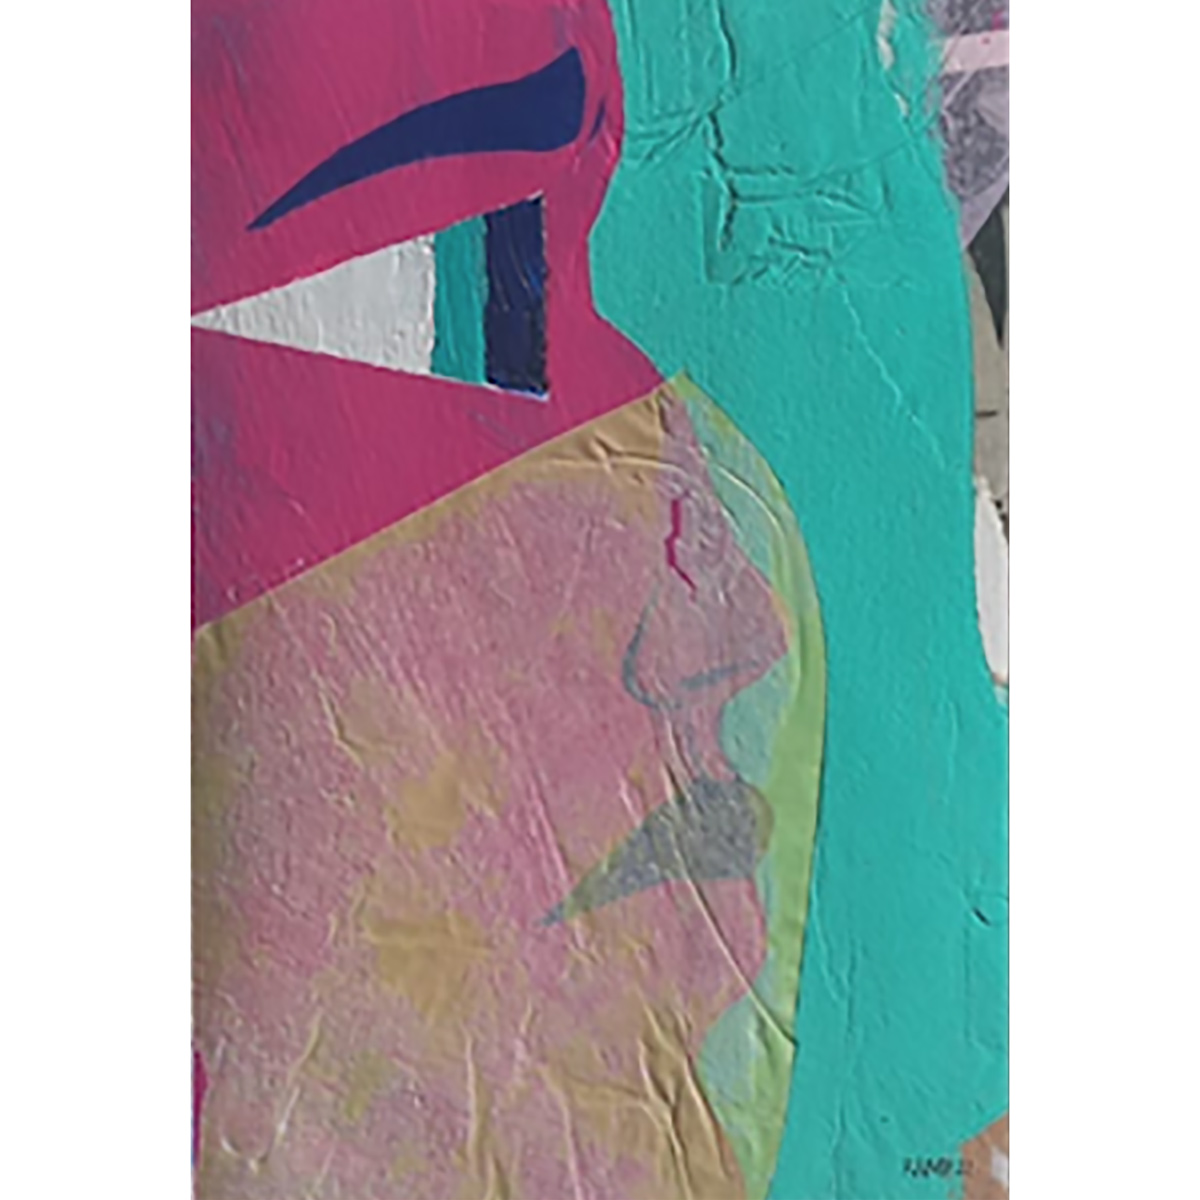 série-pintura-suspeita---Jeremias10-X-15cm2021Pintura